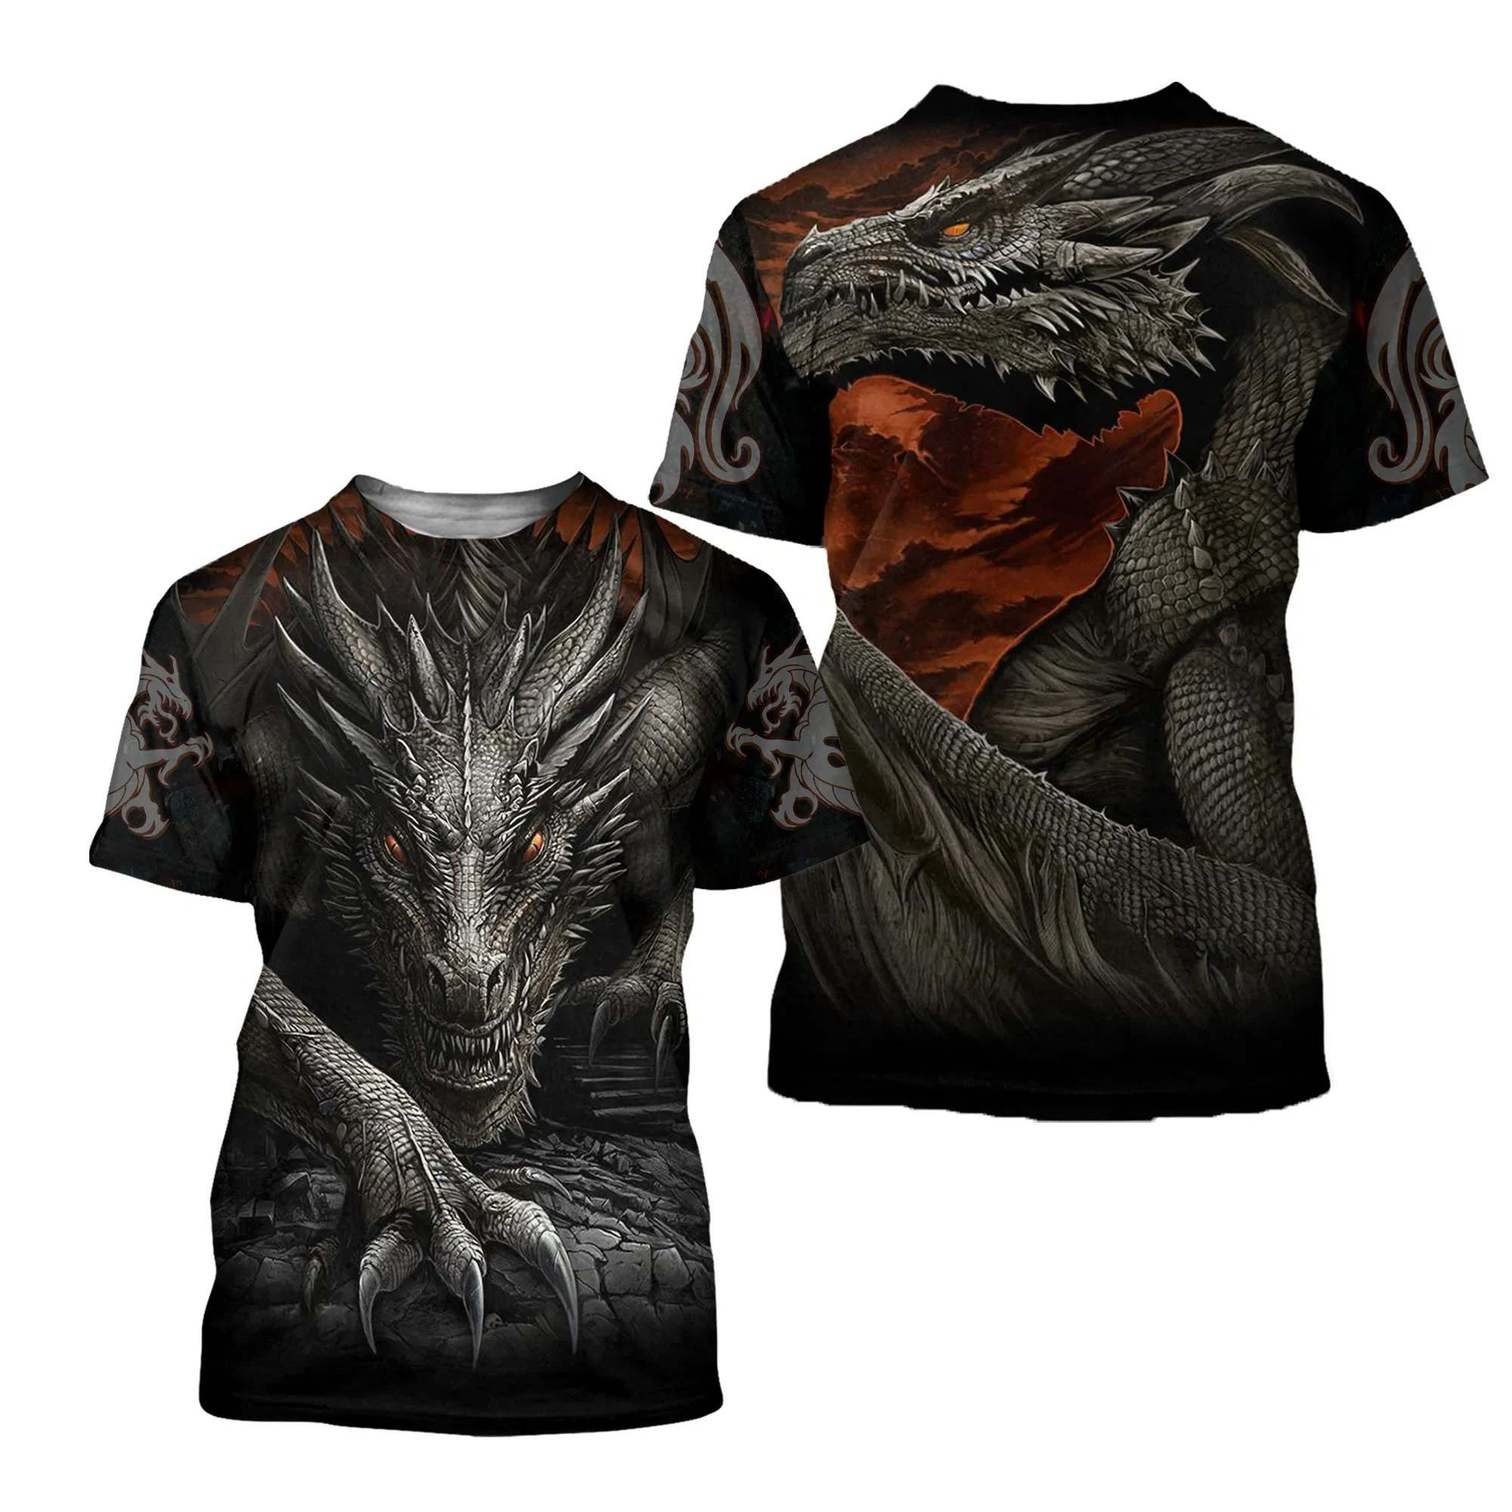 Dragon armor all over printed tshirt